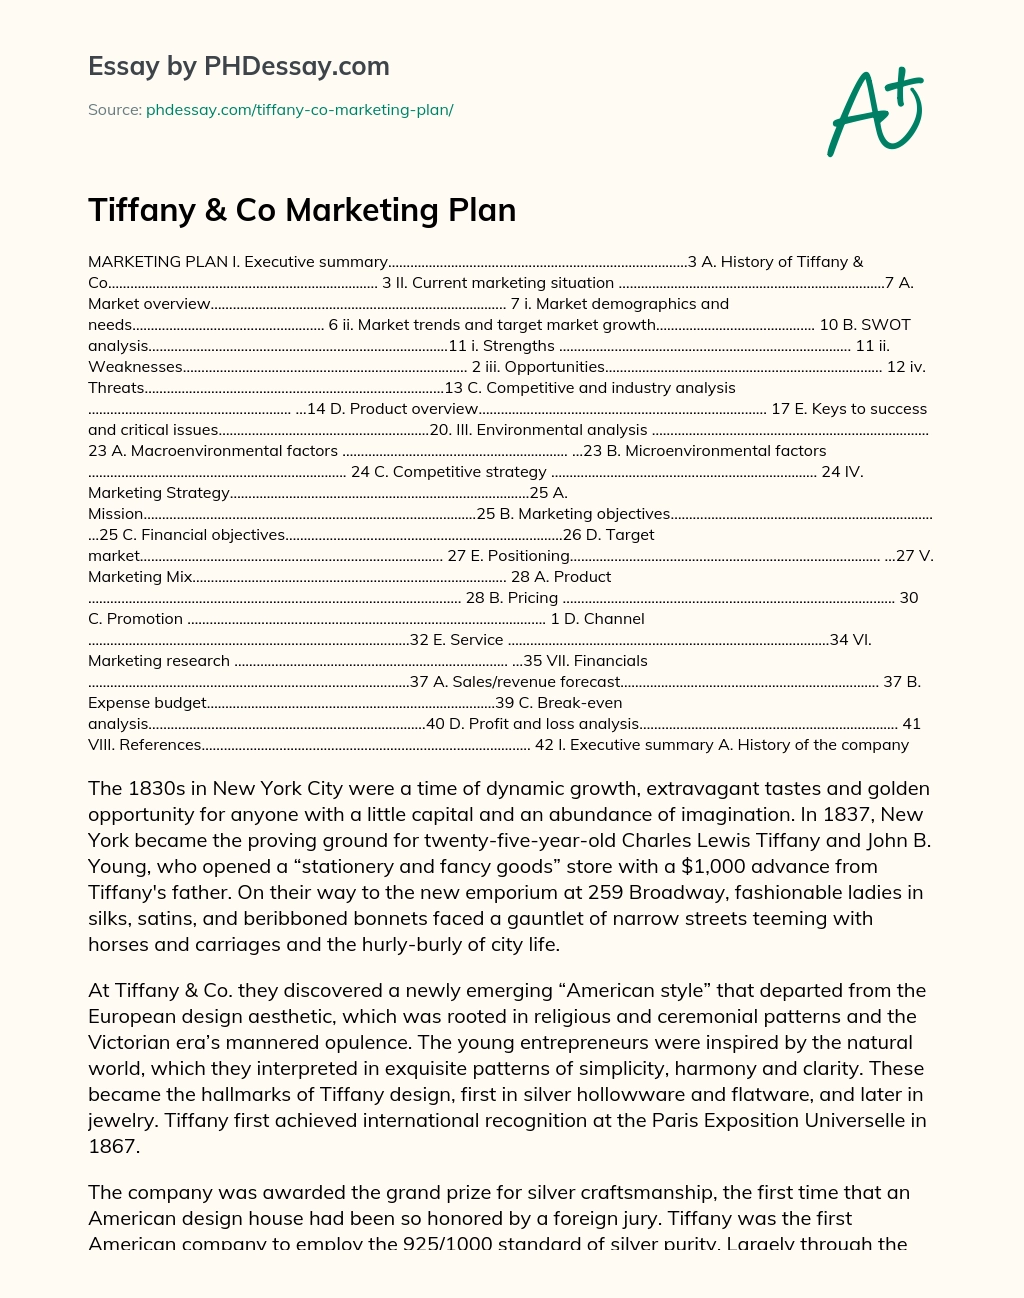 Tiffany & Co Marketing Plan essay